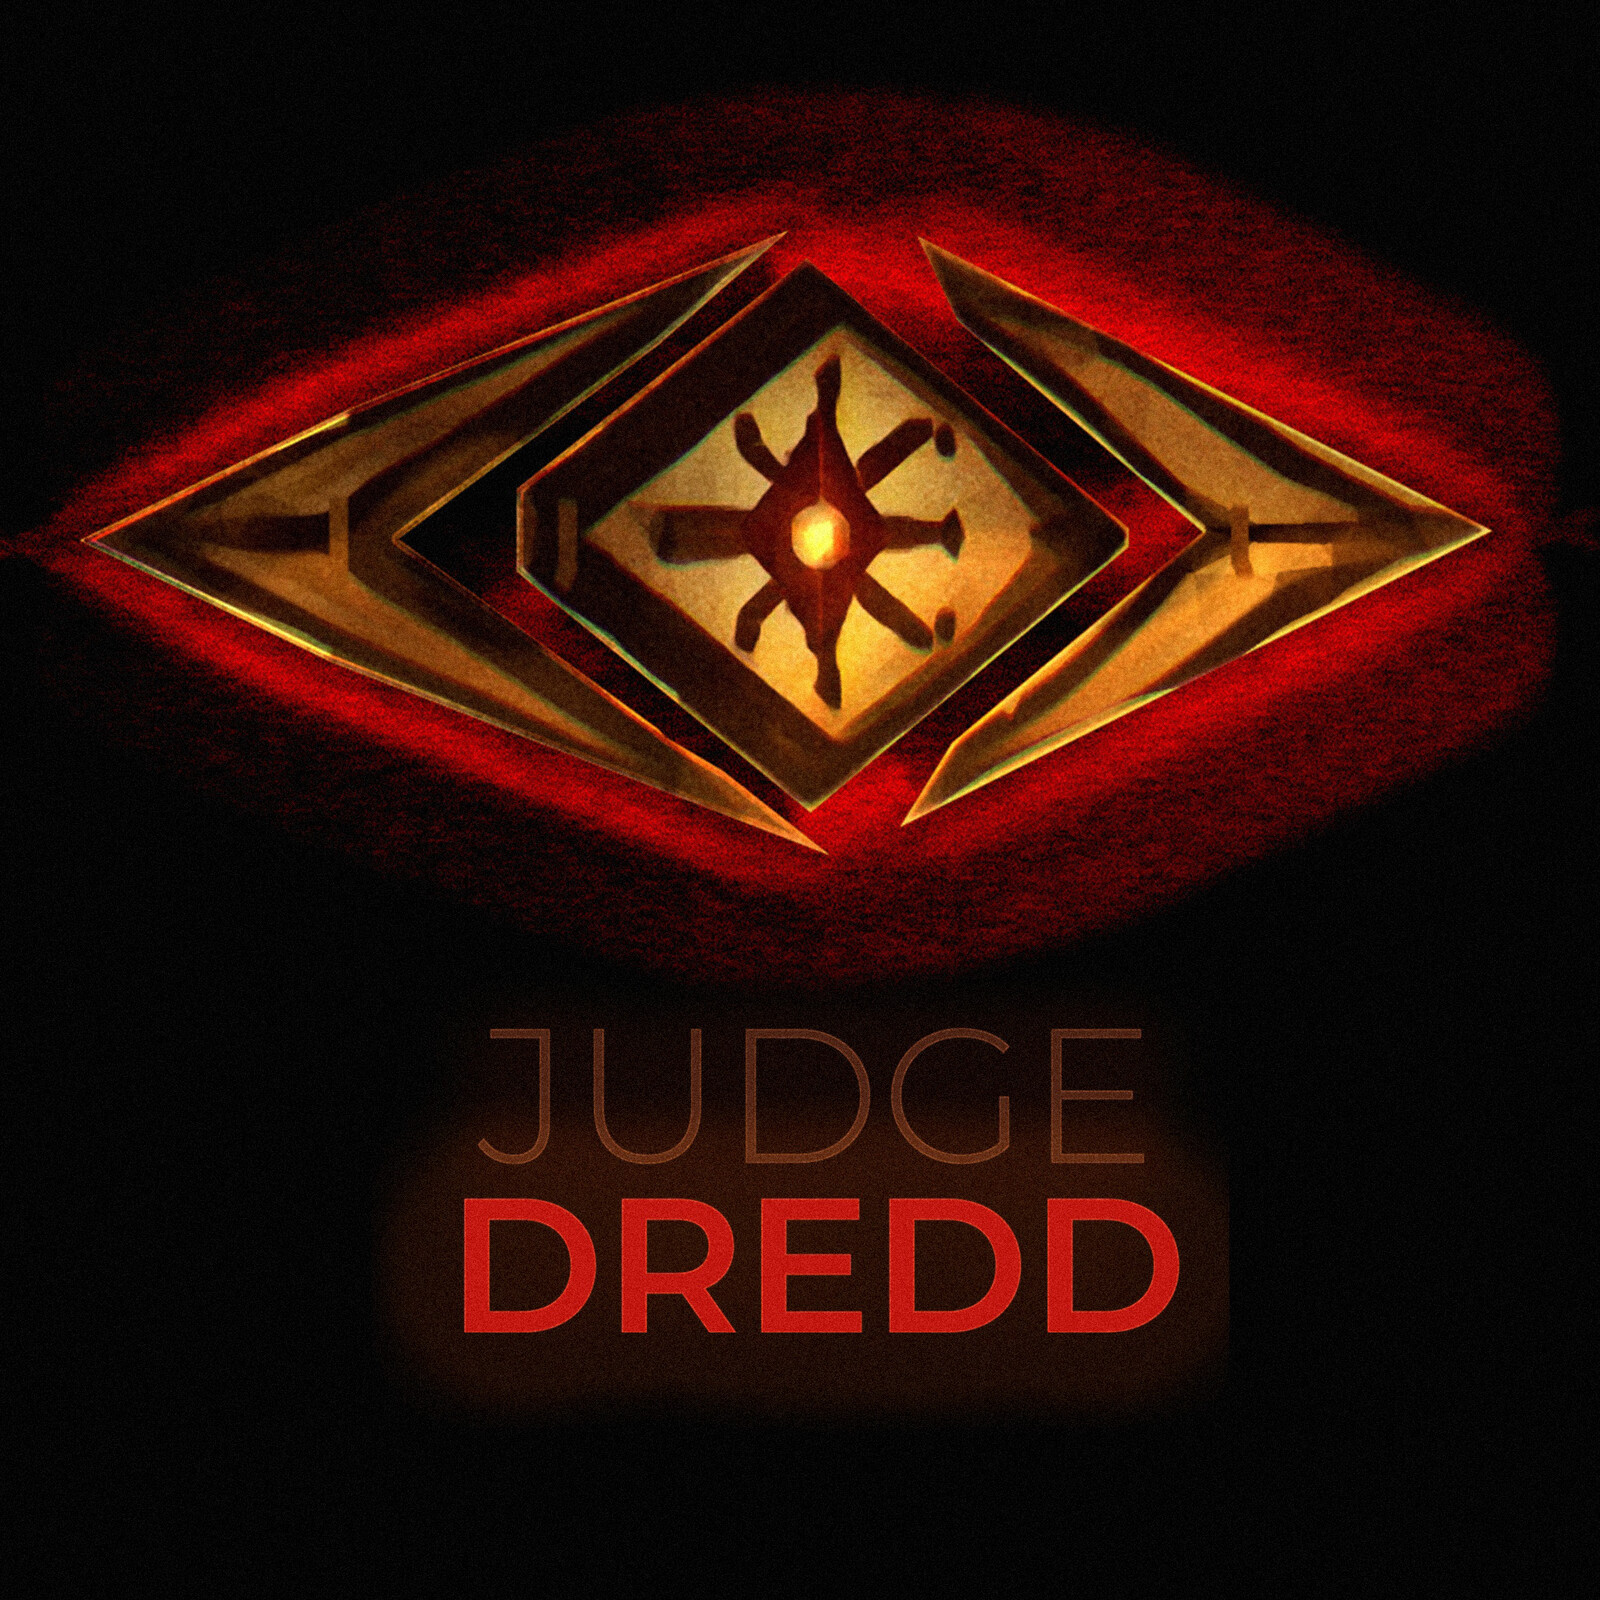 Judge DREDD